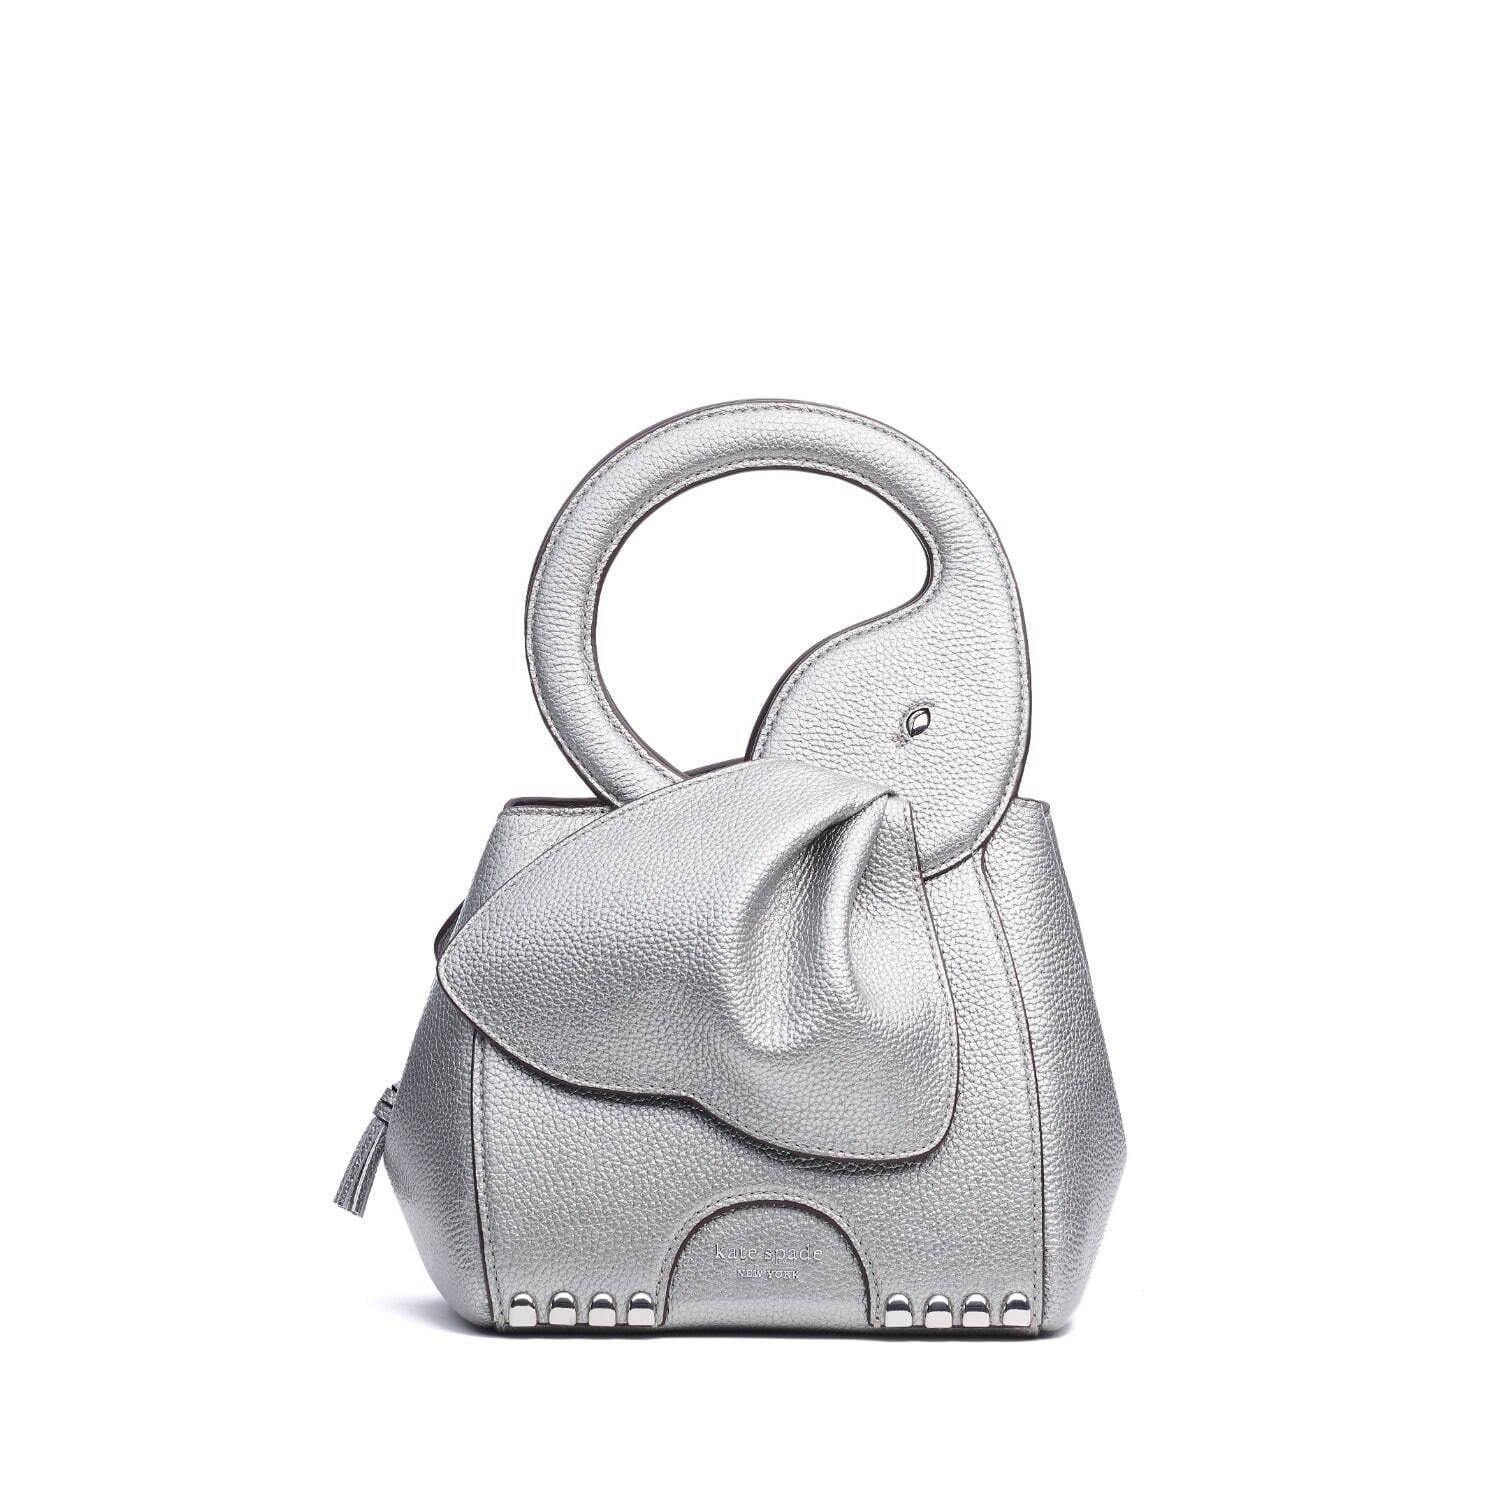 ellie metallic pebbled leather 3d elephant top handle 79,200円
(H16×W17×D14cm)